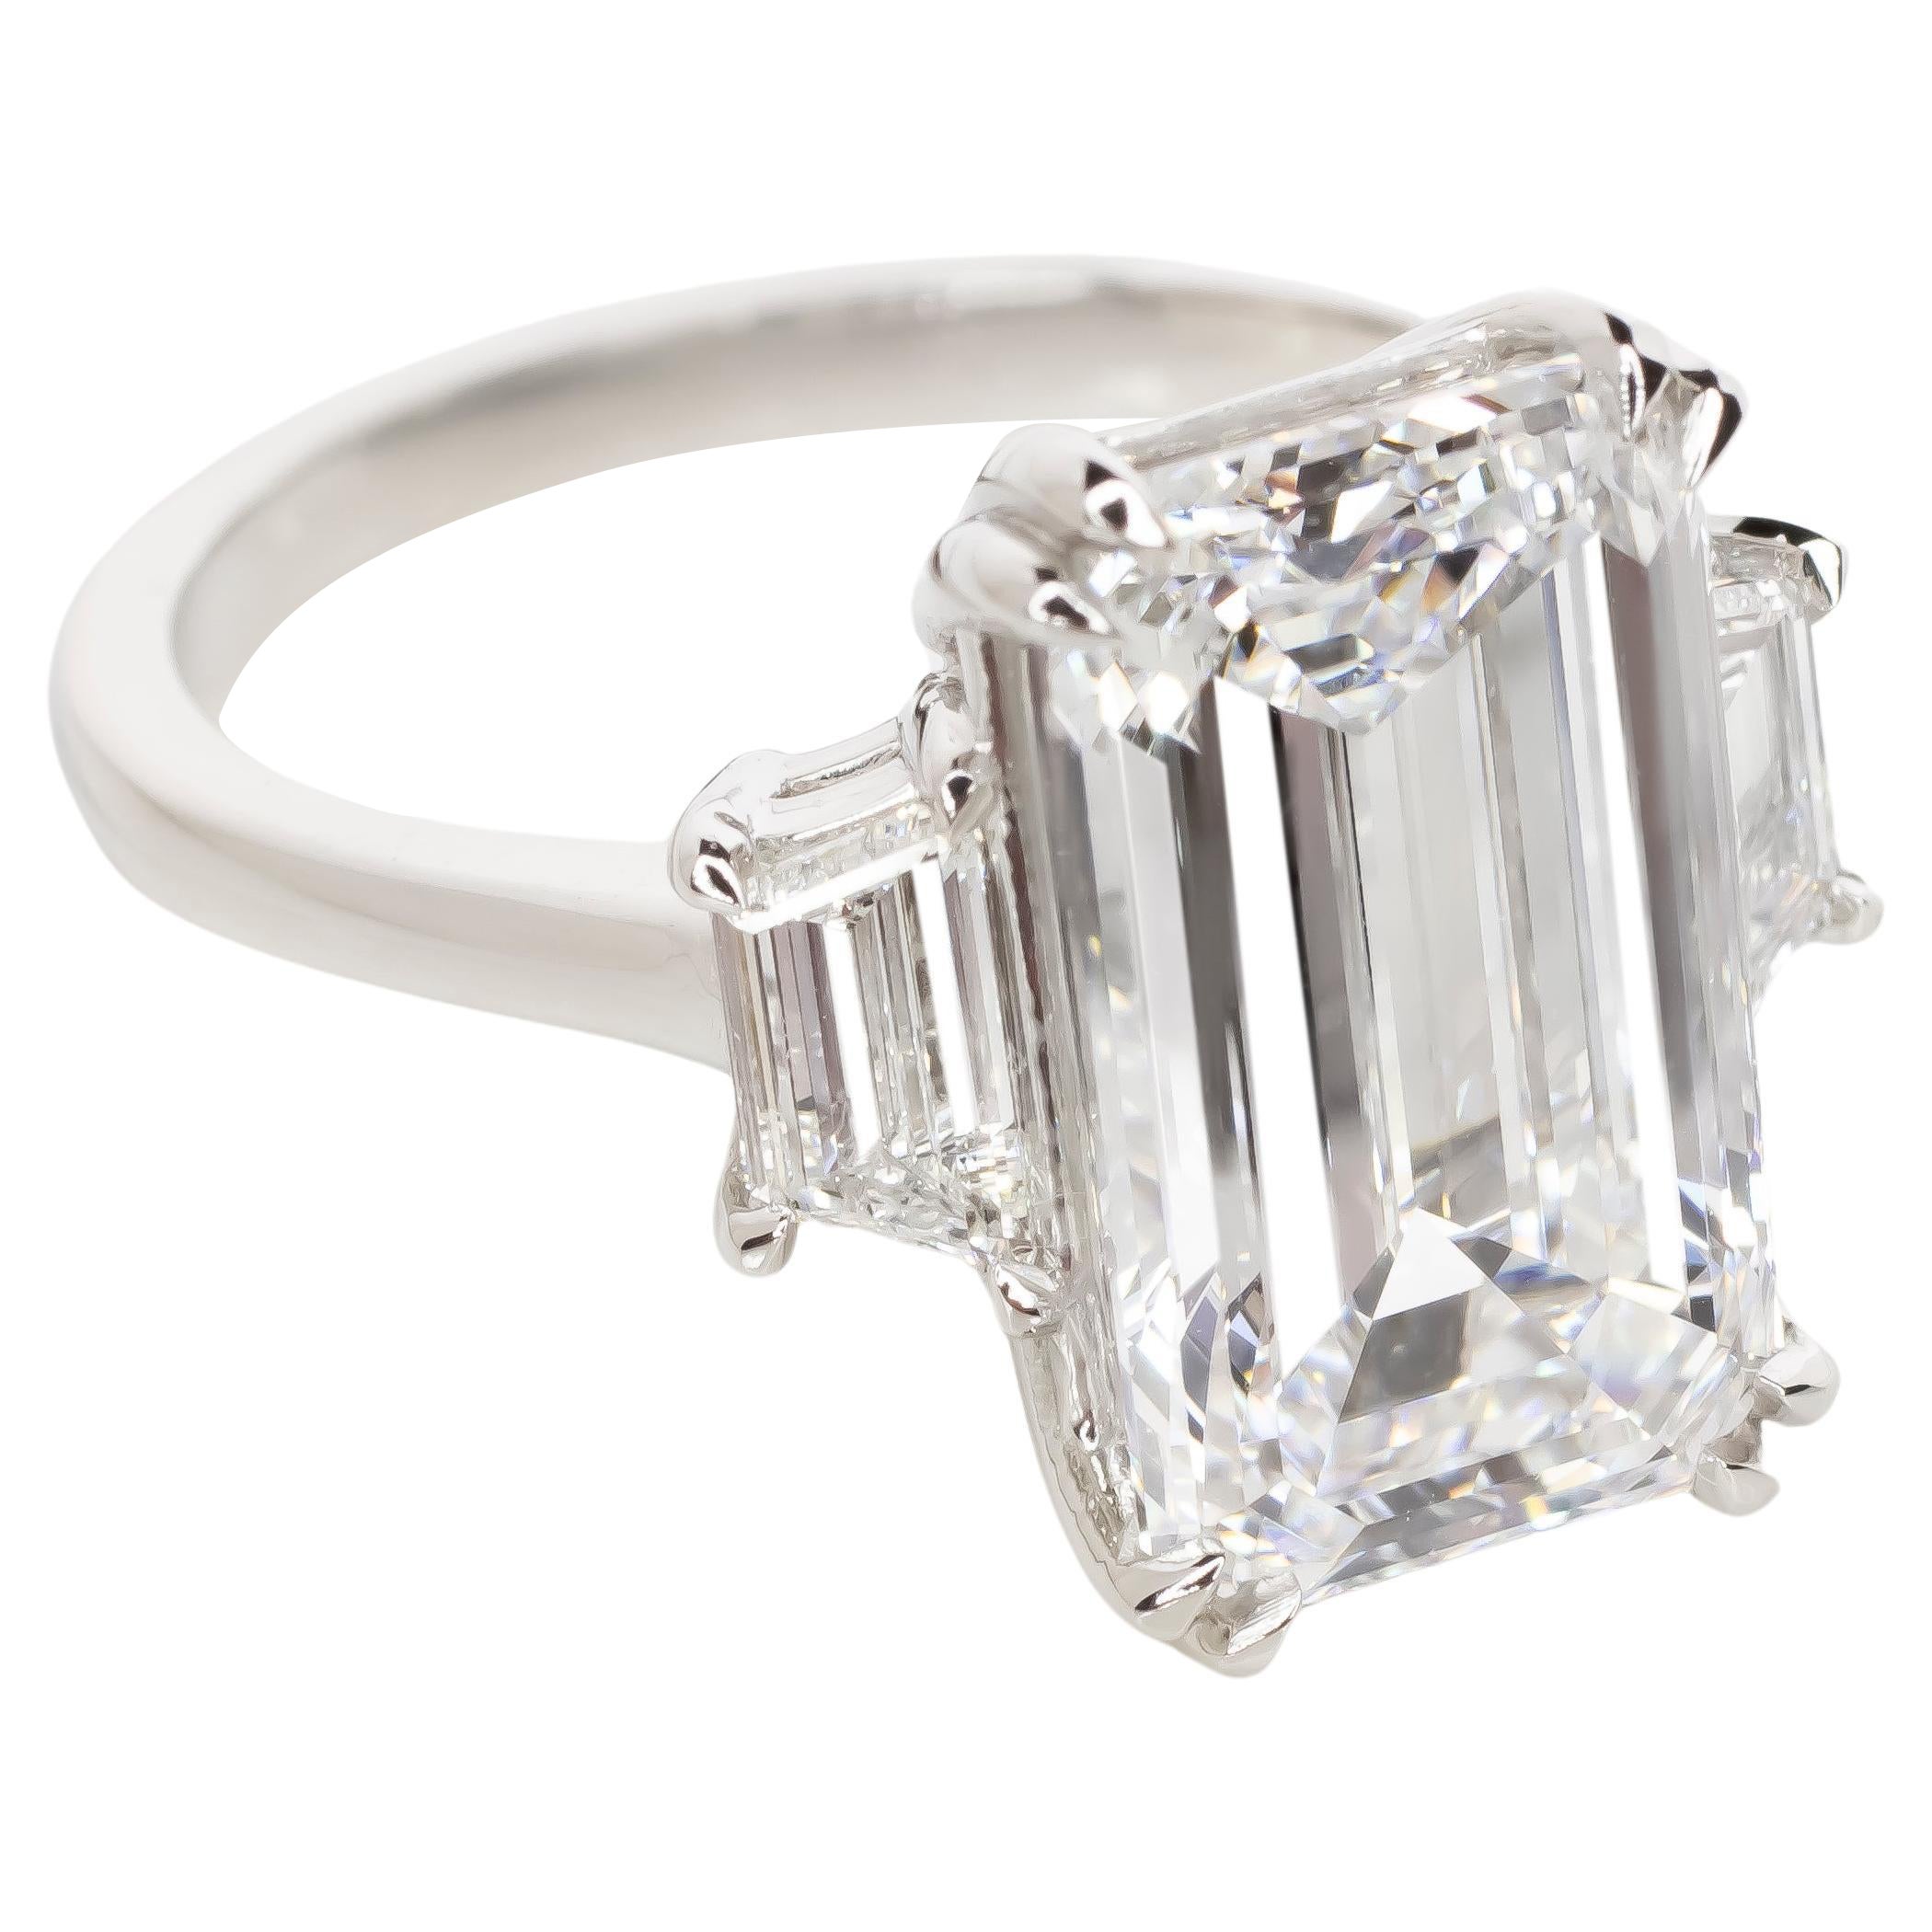 GIA Certified 5 Carat D Color Emerald Cut Diamond Ring TYPE IIA